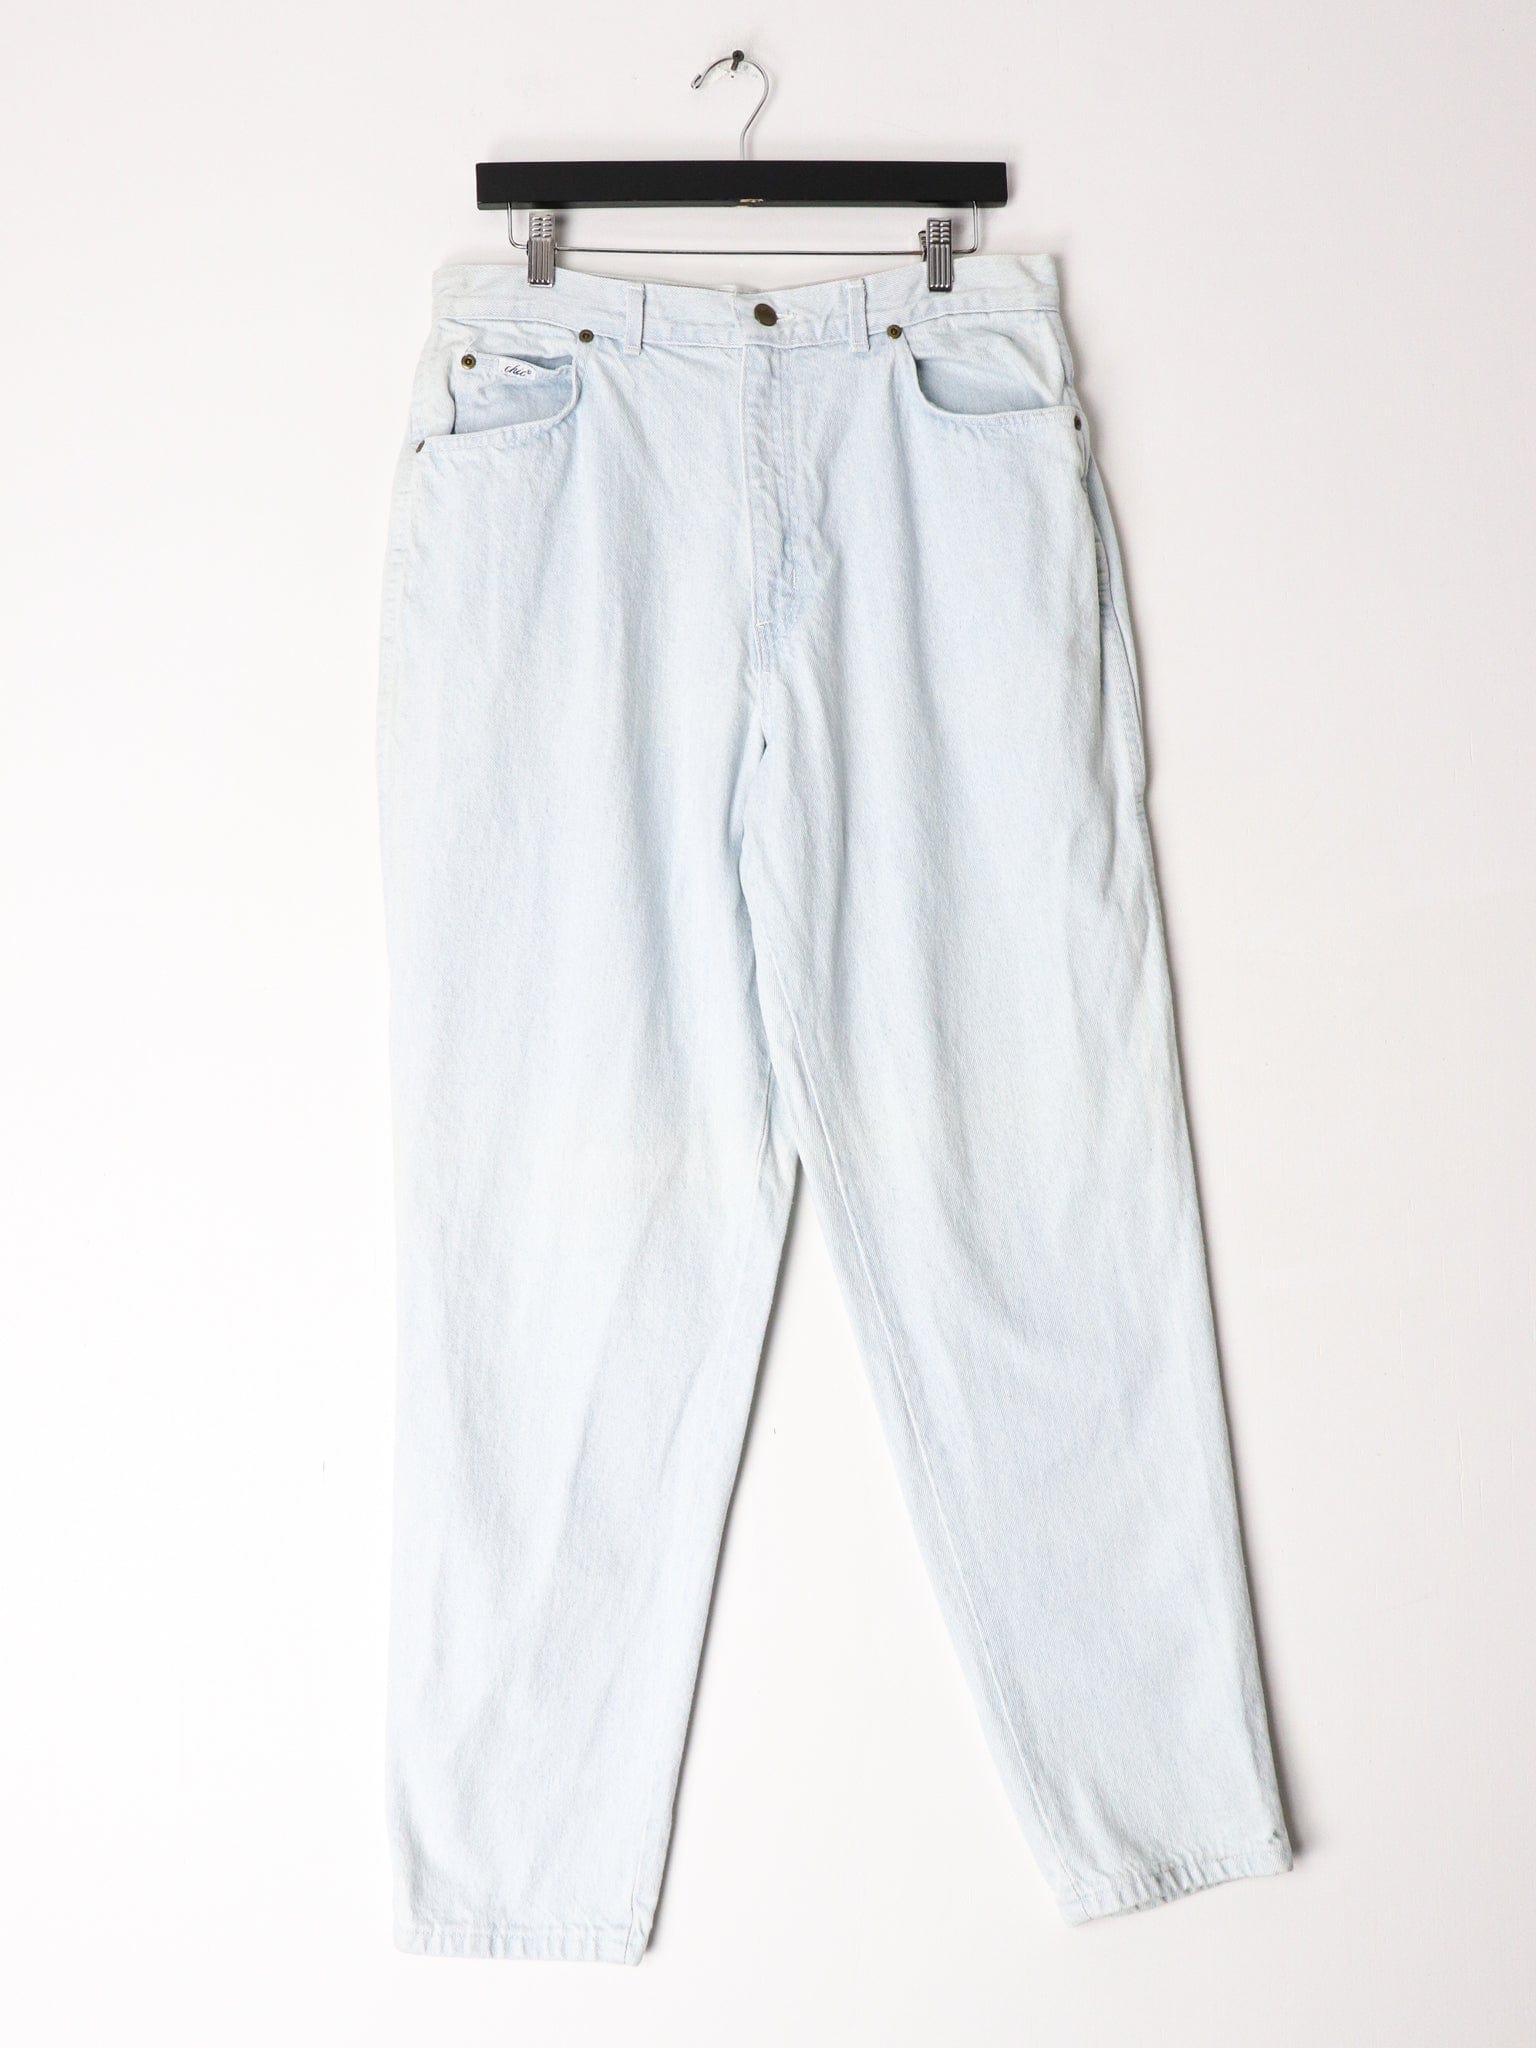 Other Jeans Vintage Chic Denim Jeans Women's Size 18